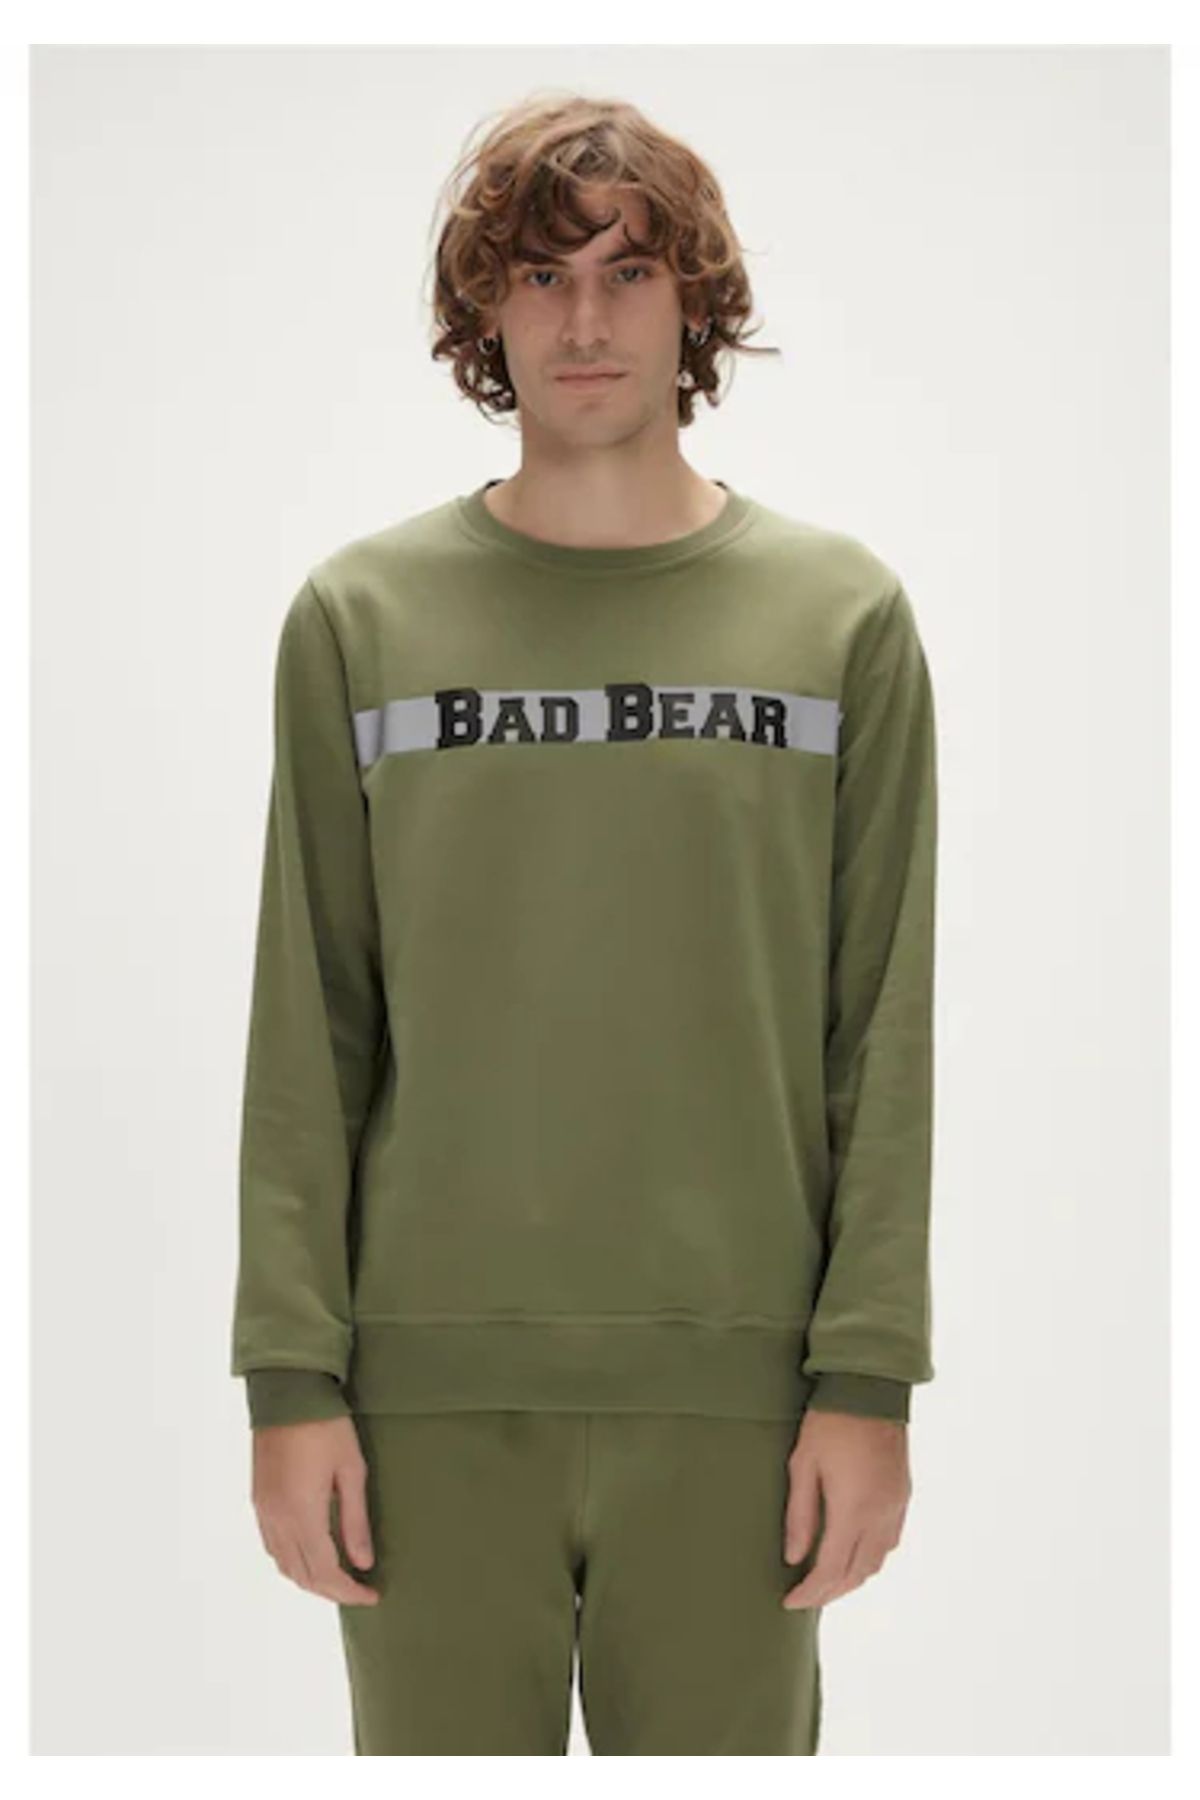 Bad Bear Reflect Bear Sweatshirt